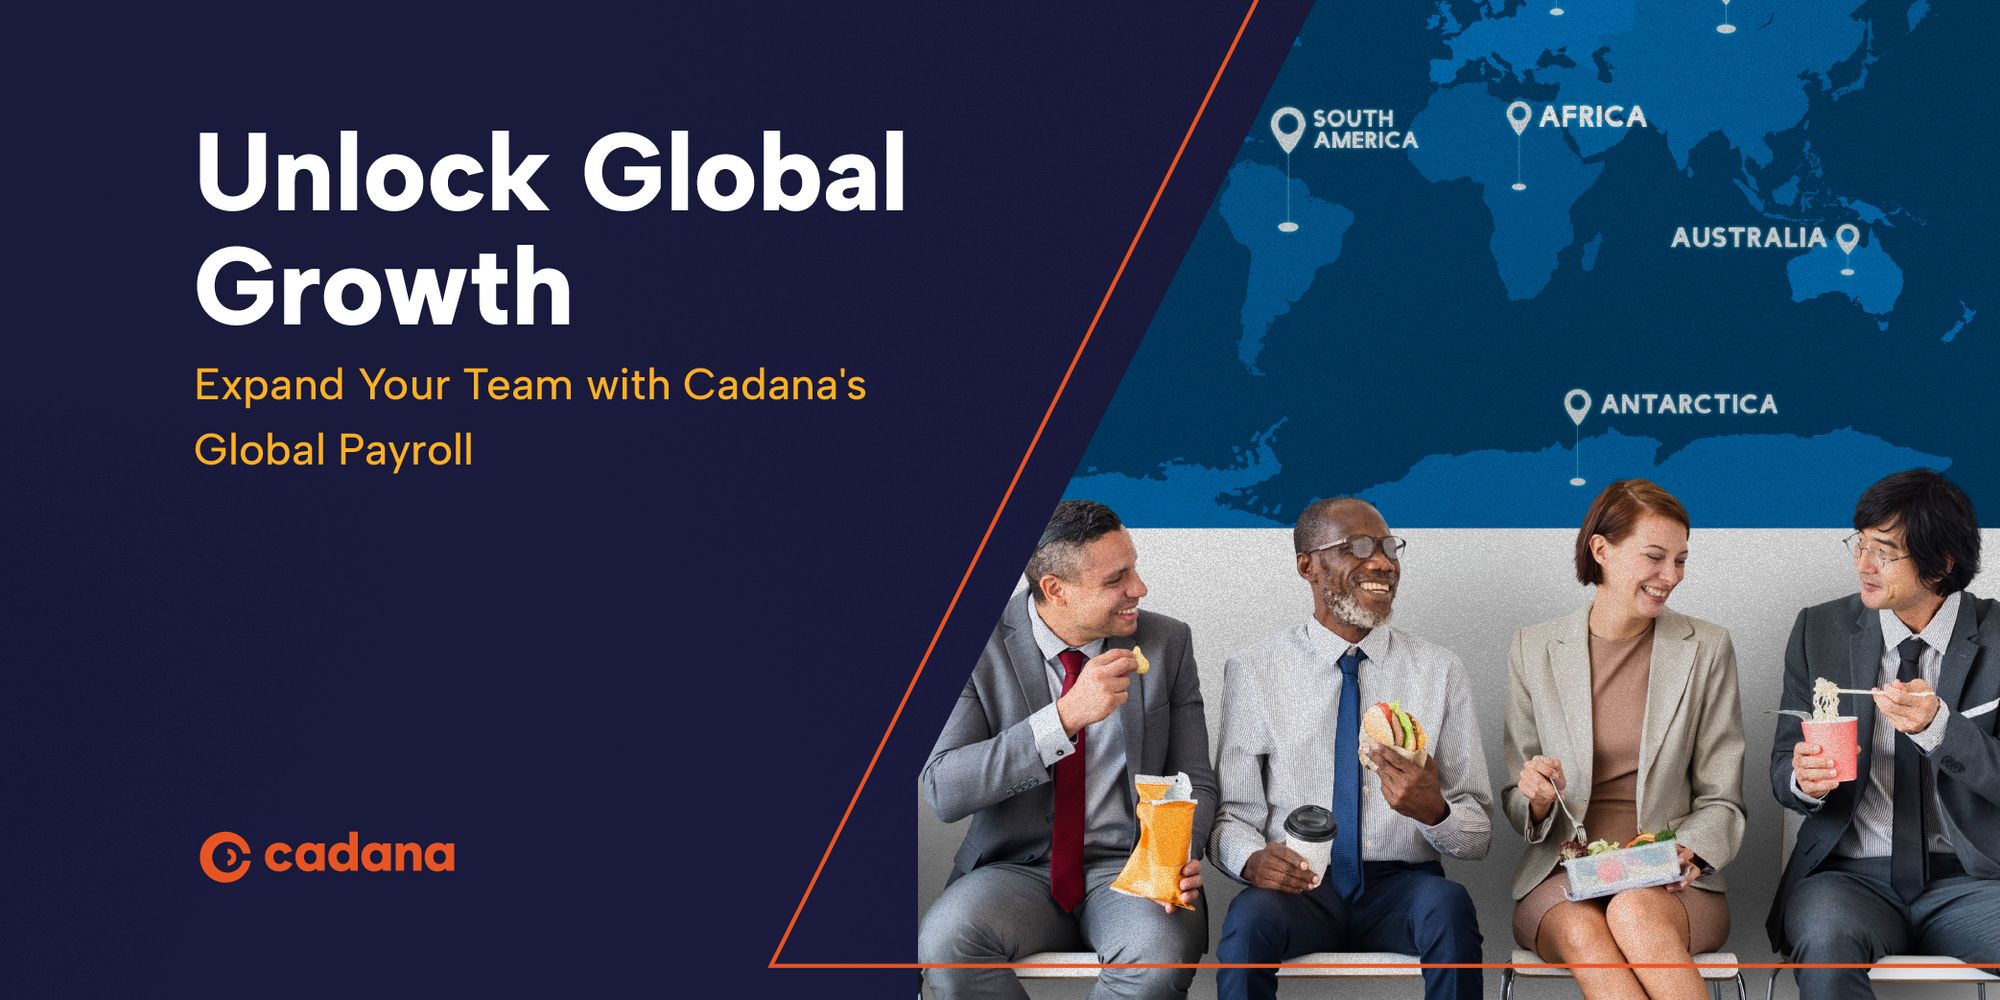 Expand Your Team with Cadana's Global Payroll